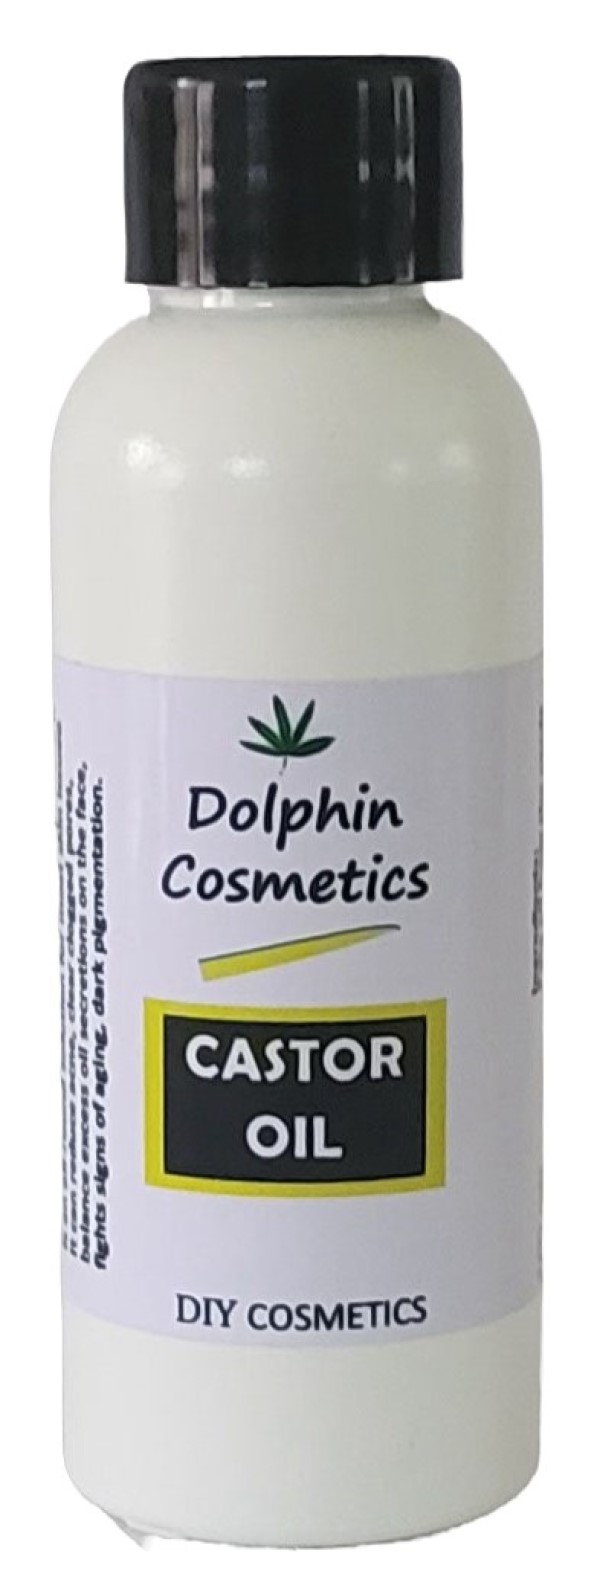 dolphin-cosmetics-castor-oil